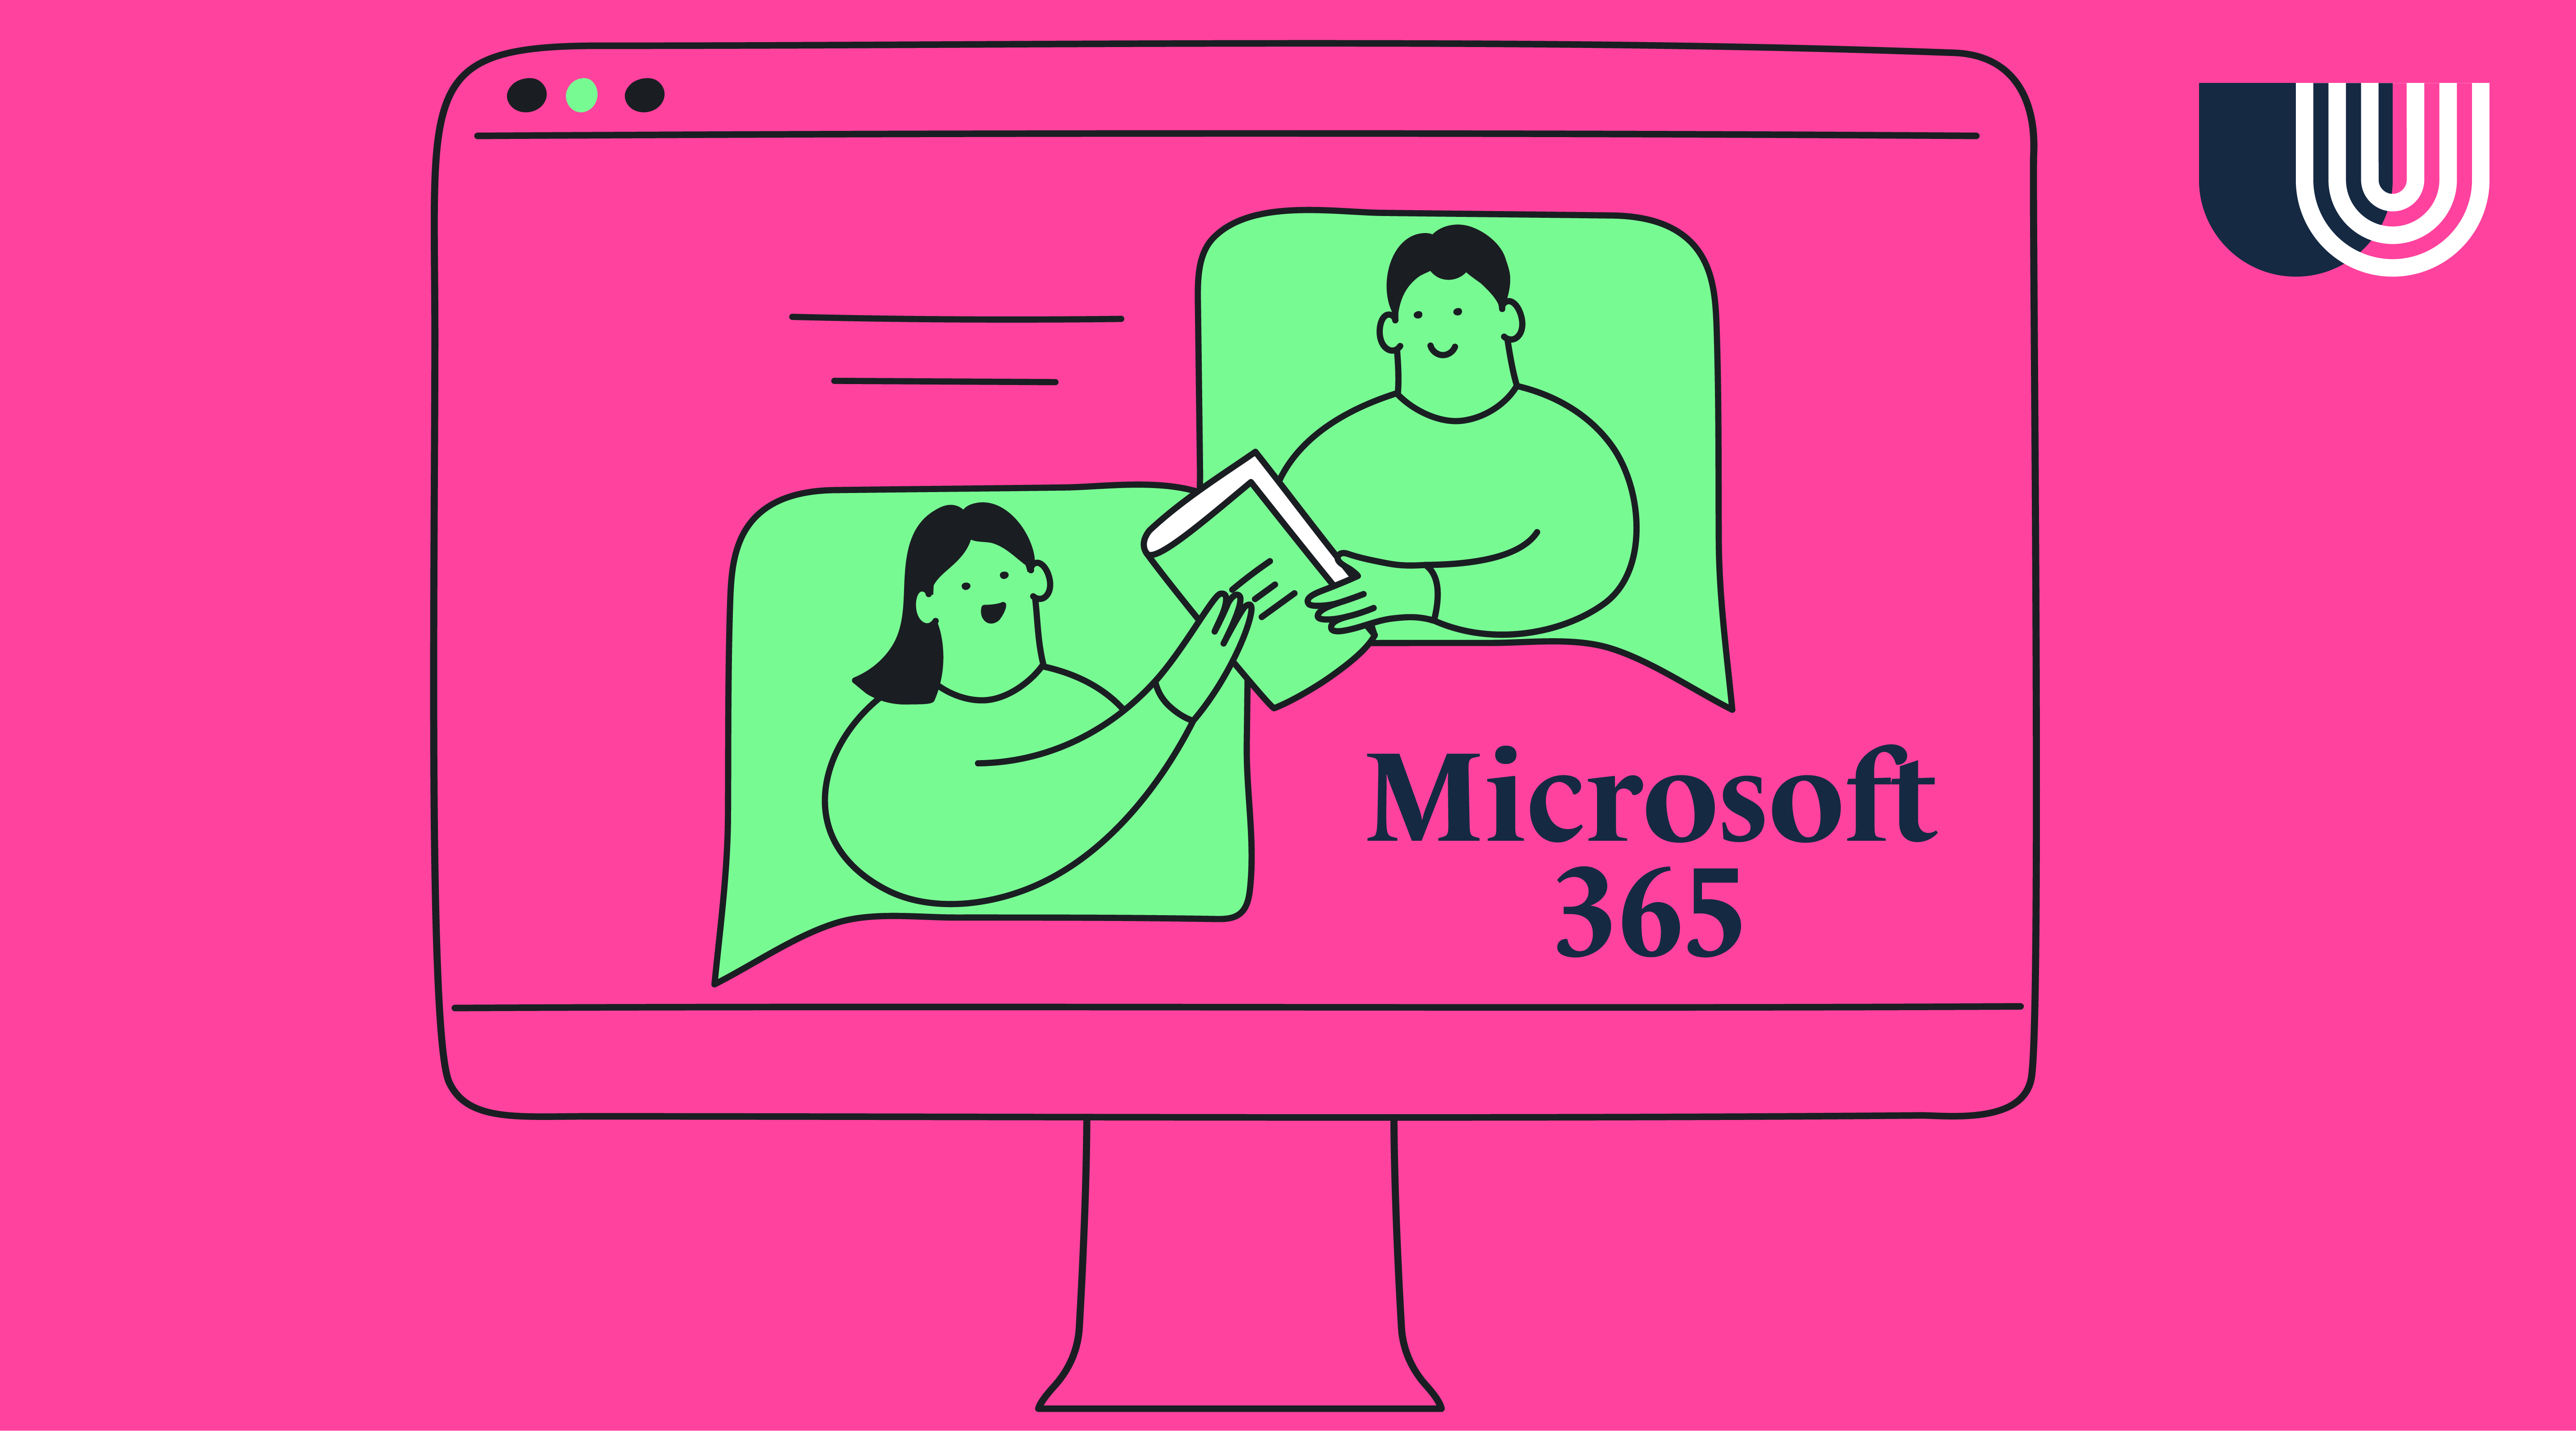 Microsoft 365 